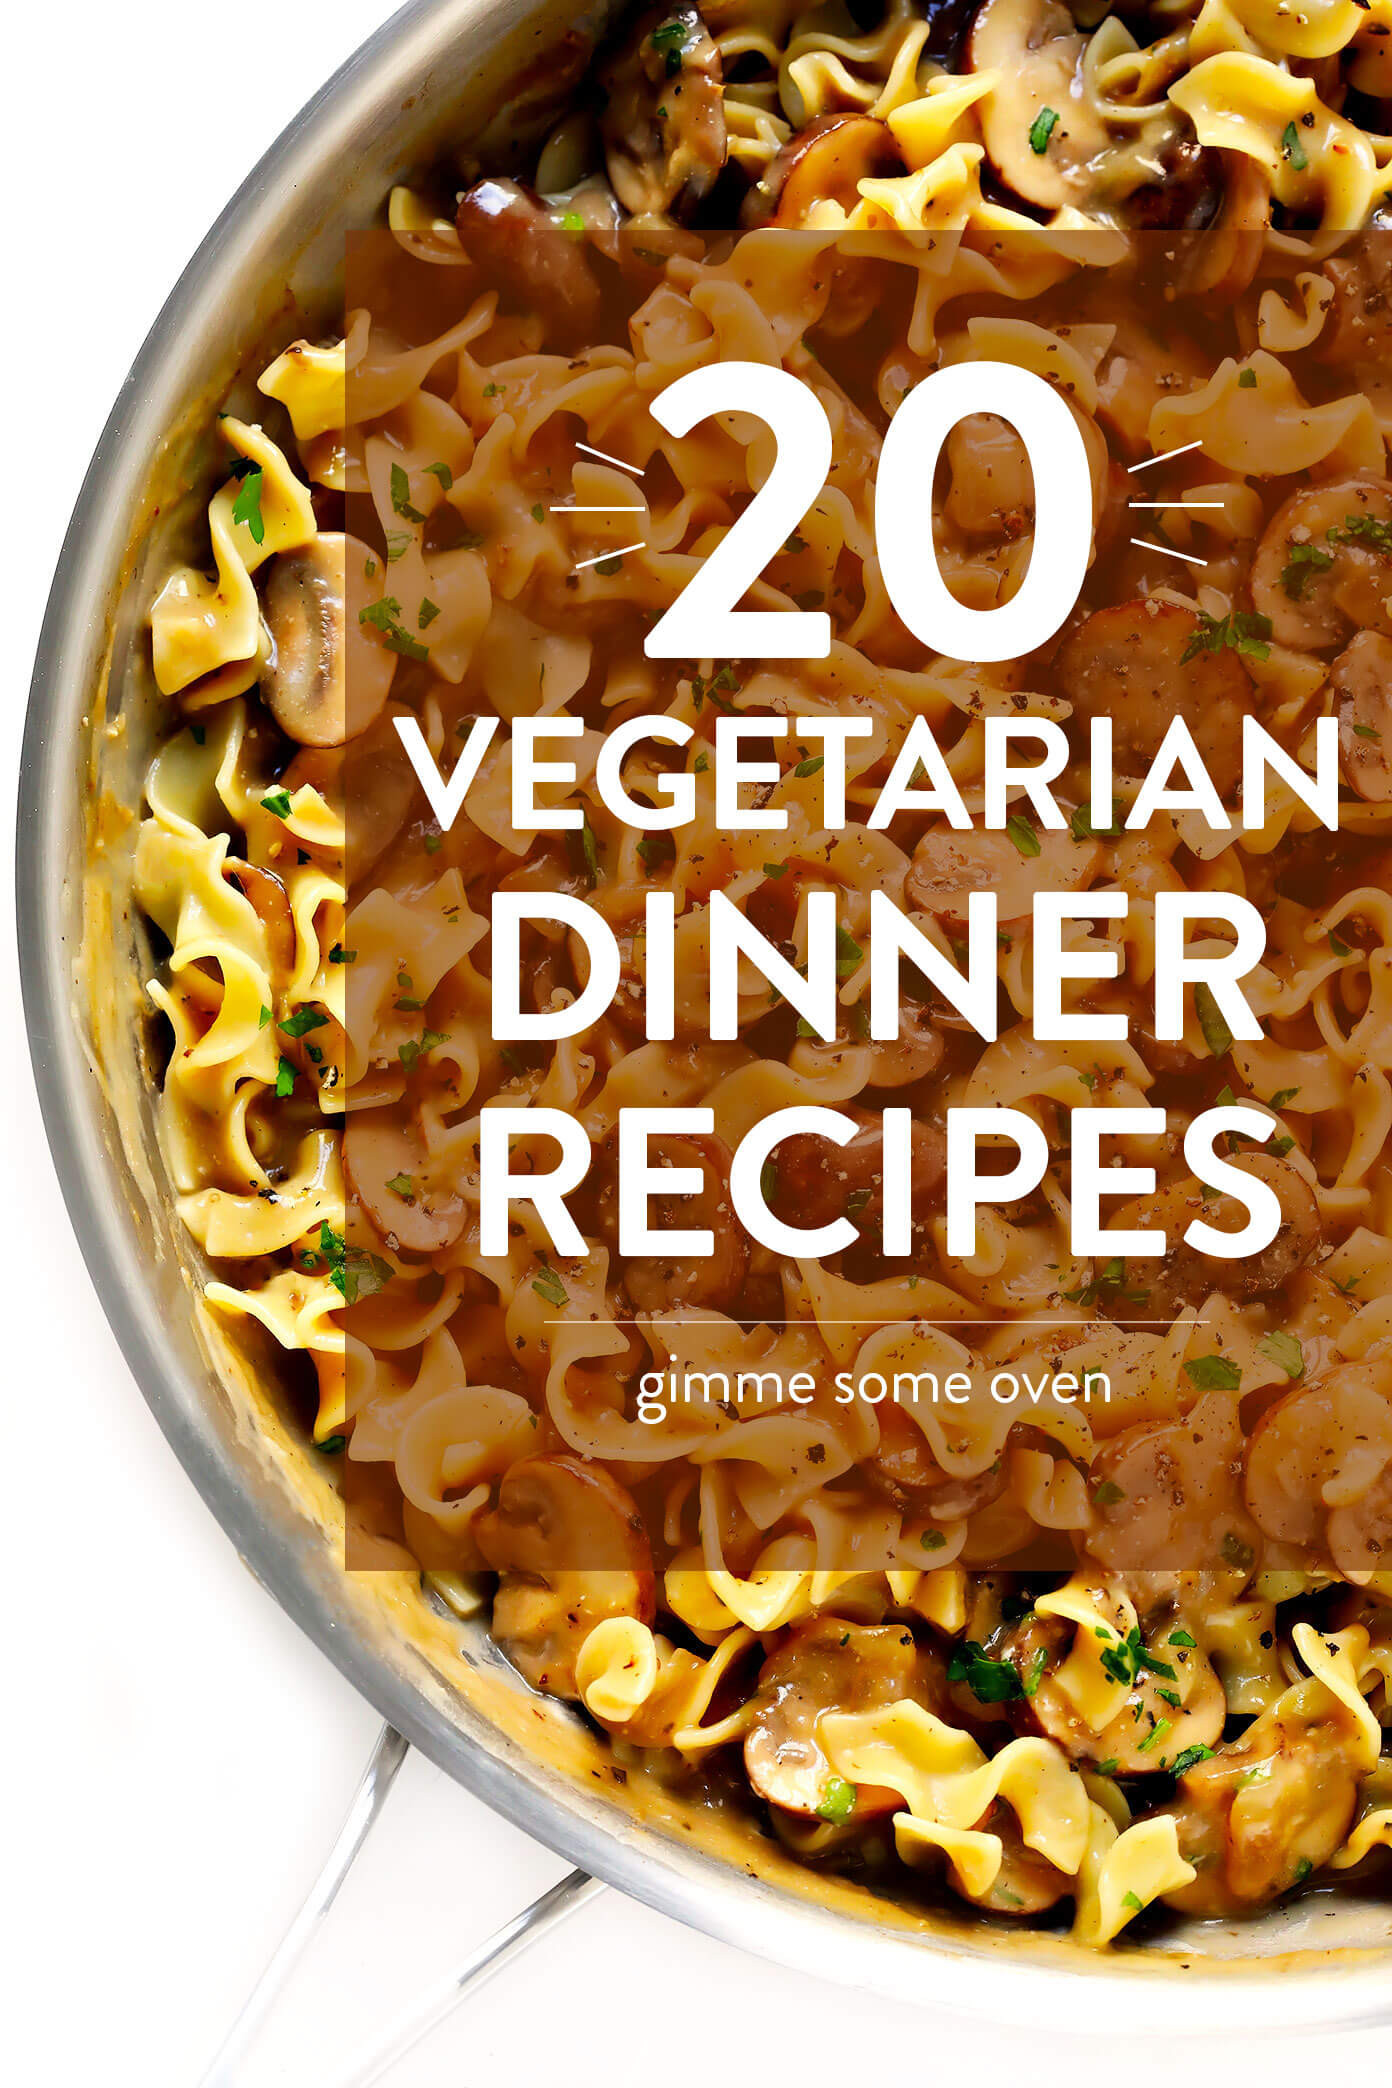 Simple Vegan Dinner
 20 Ve arian Dinner Recipes That Everyone Will LOVE